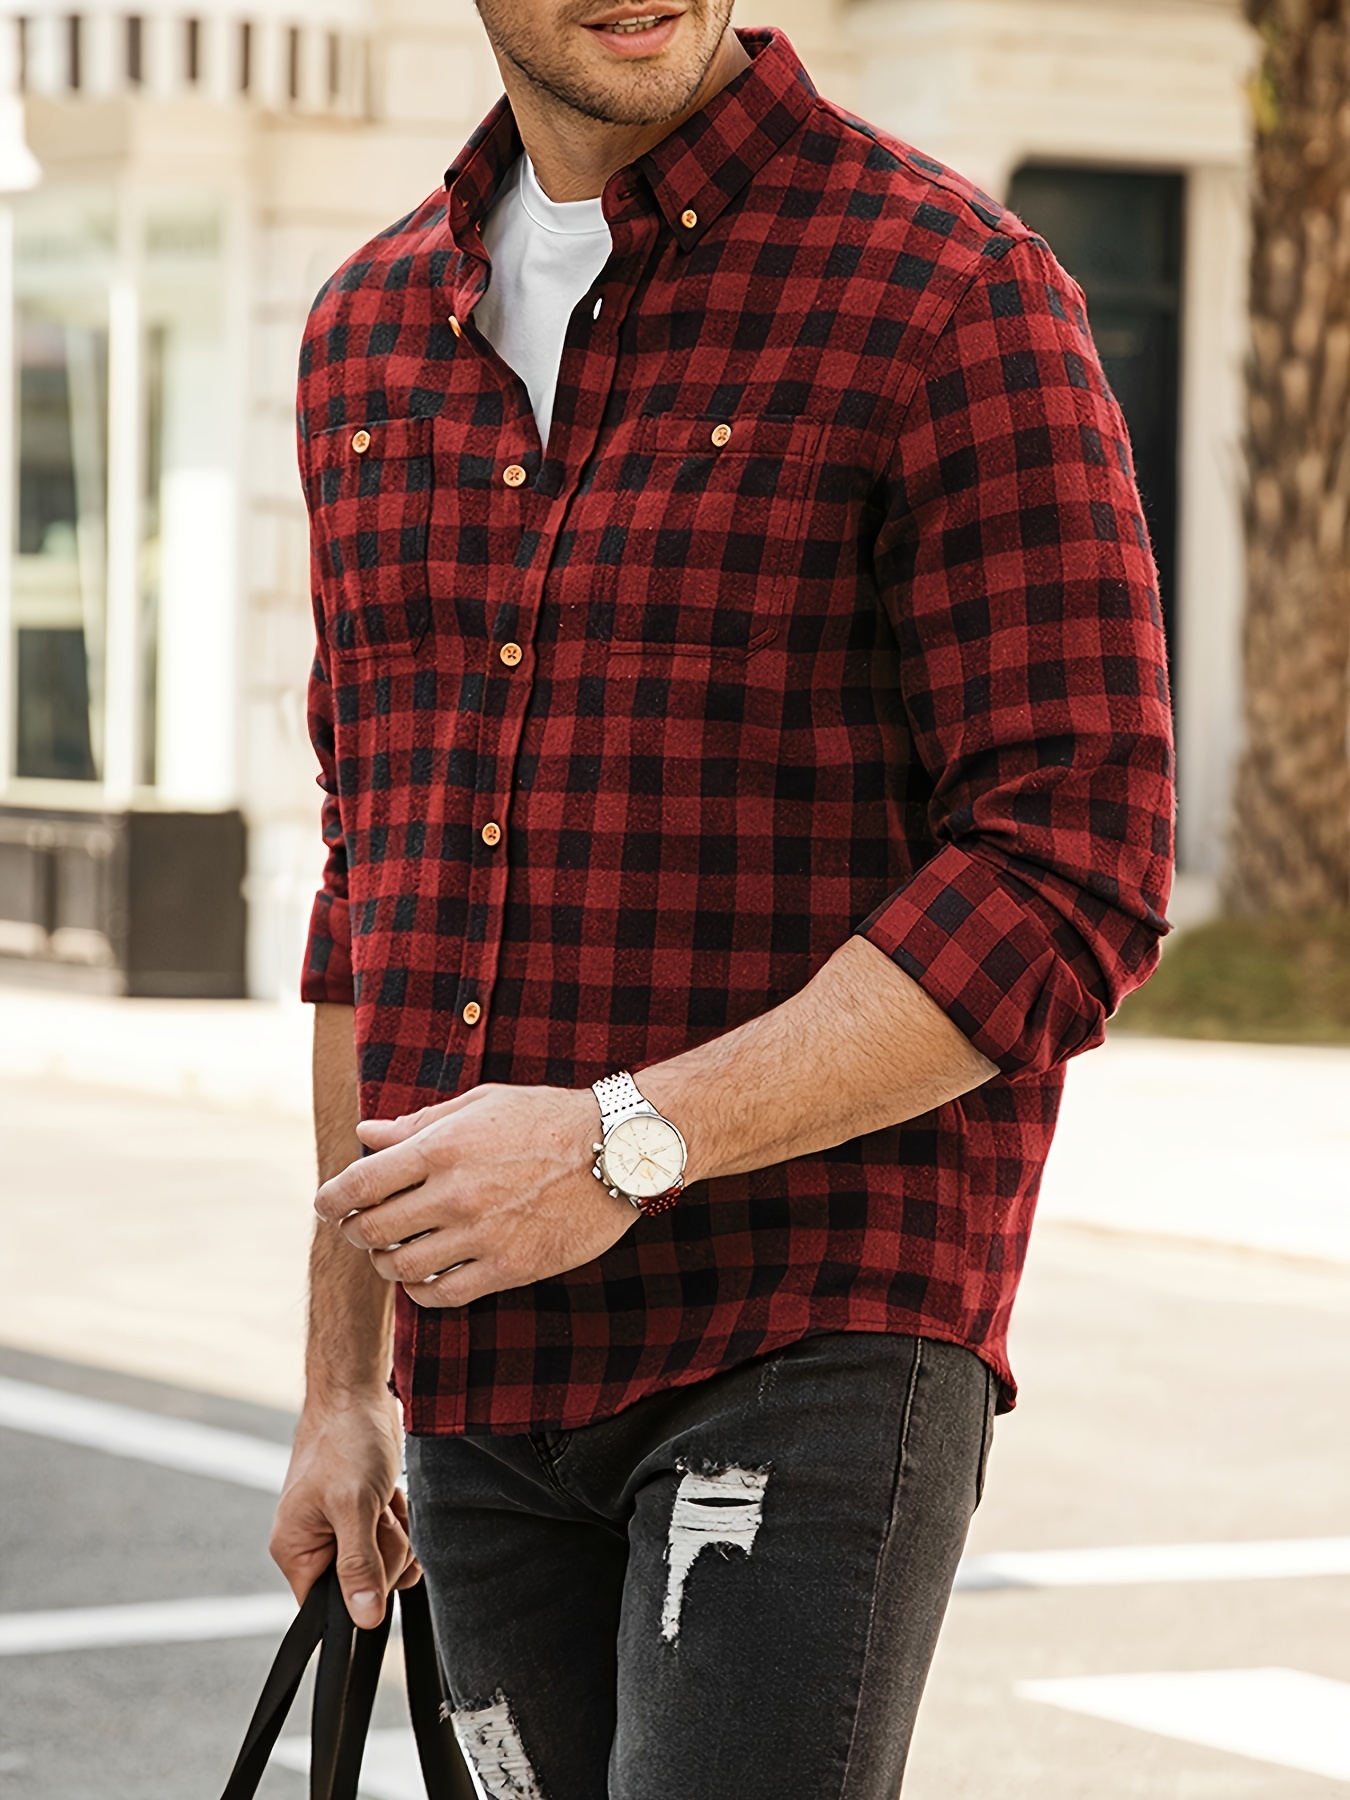 Redhead Buffalo Creek Flannel Long-Sleeve Shirt for Men - Red/Gray - M